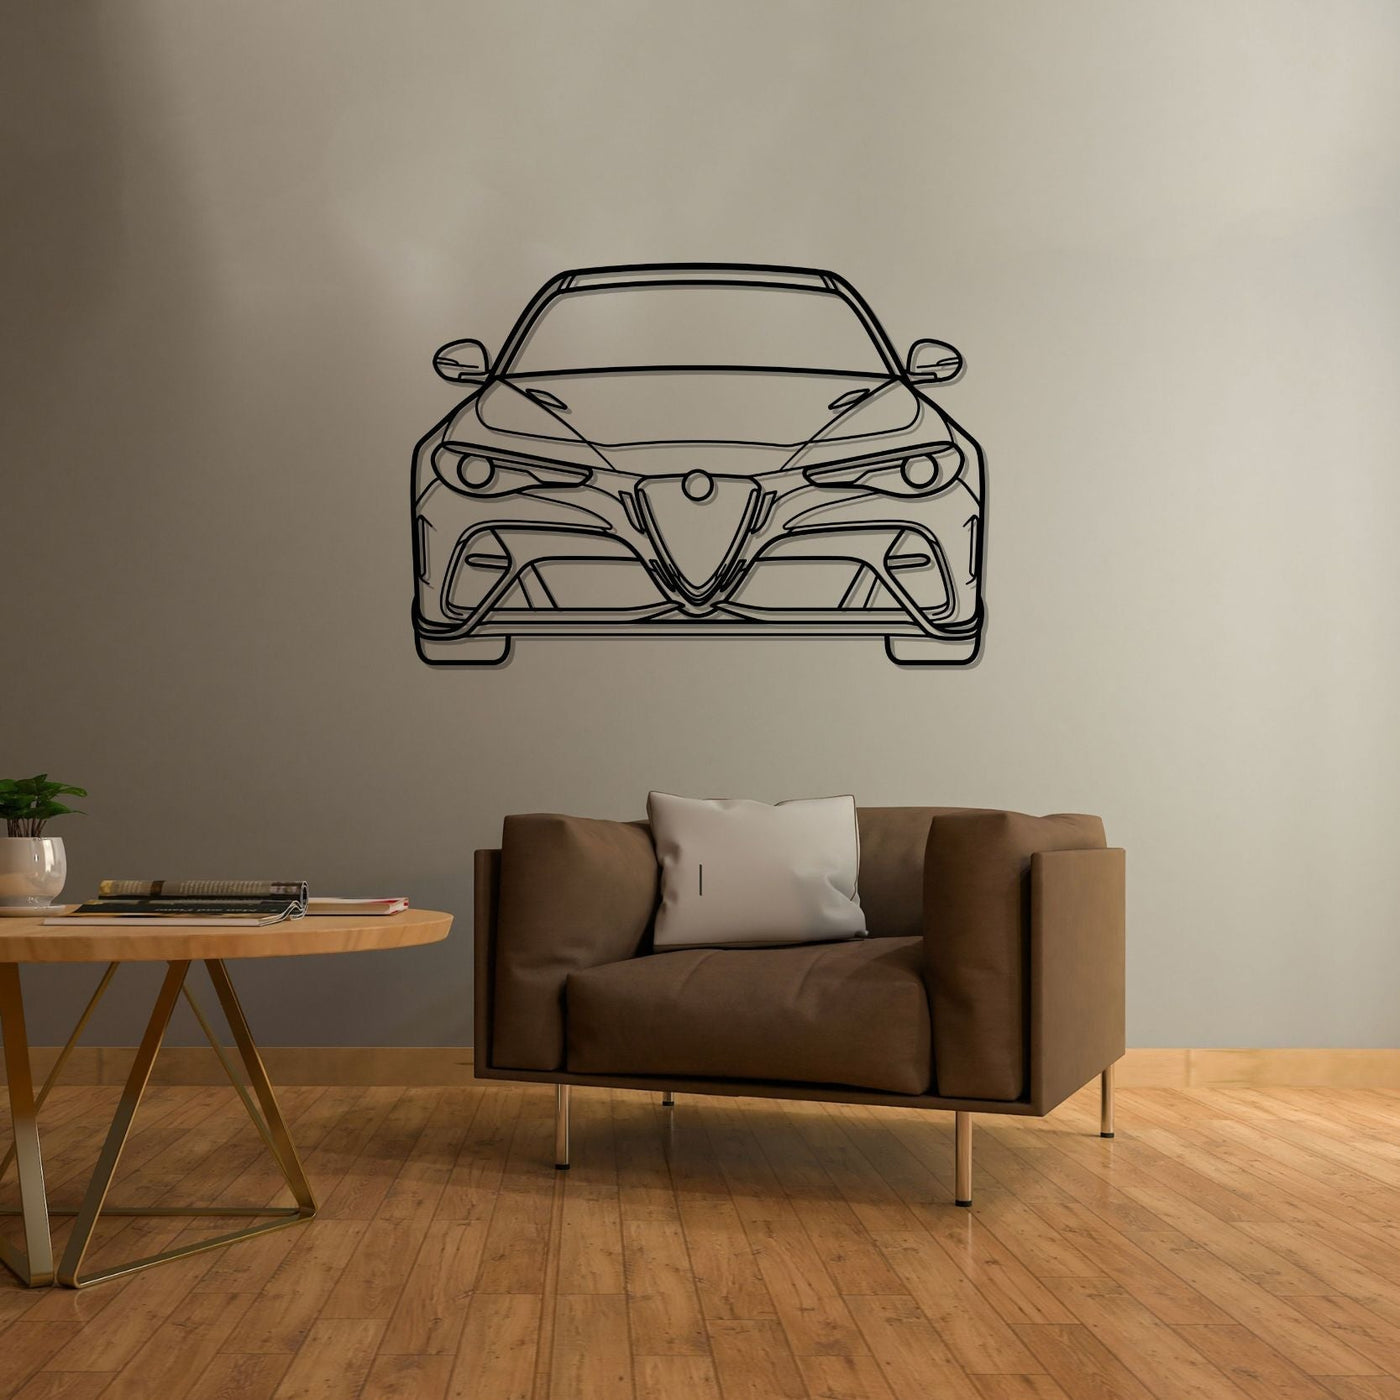 Giulia GTAm Front 2020  Silhouette Metal Wall Art